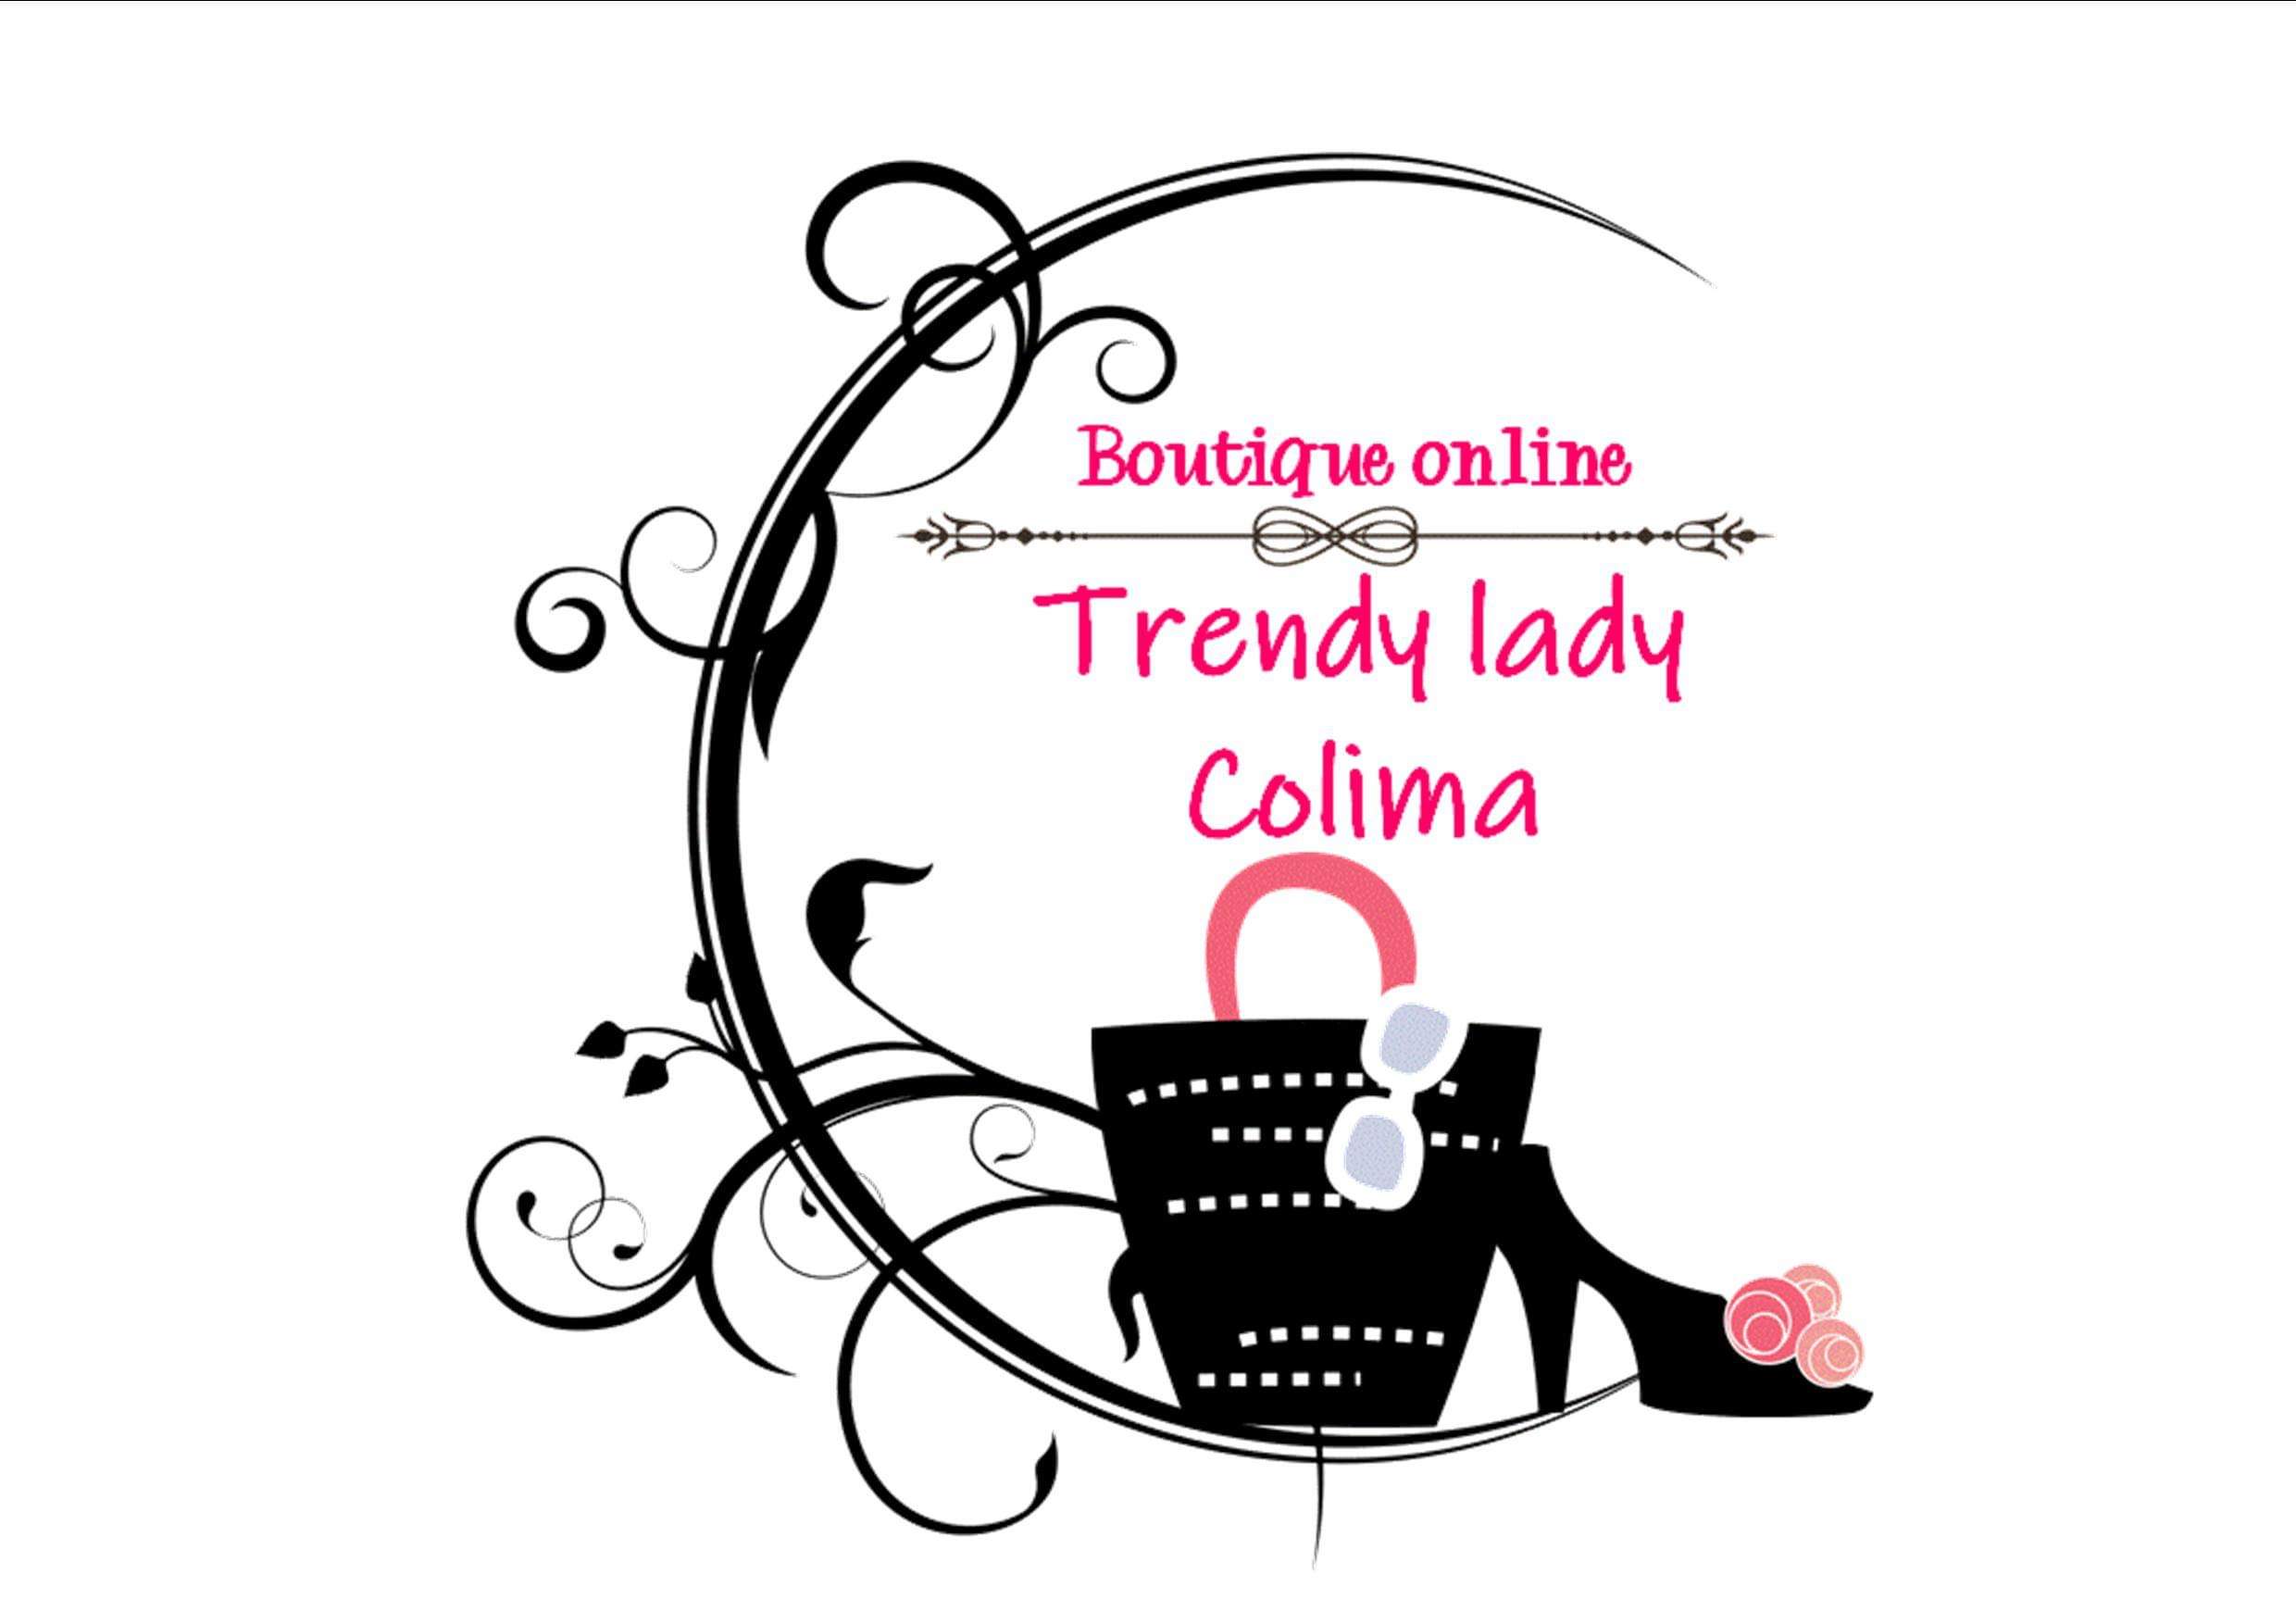 Boutique Trendy Lady Colima